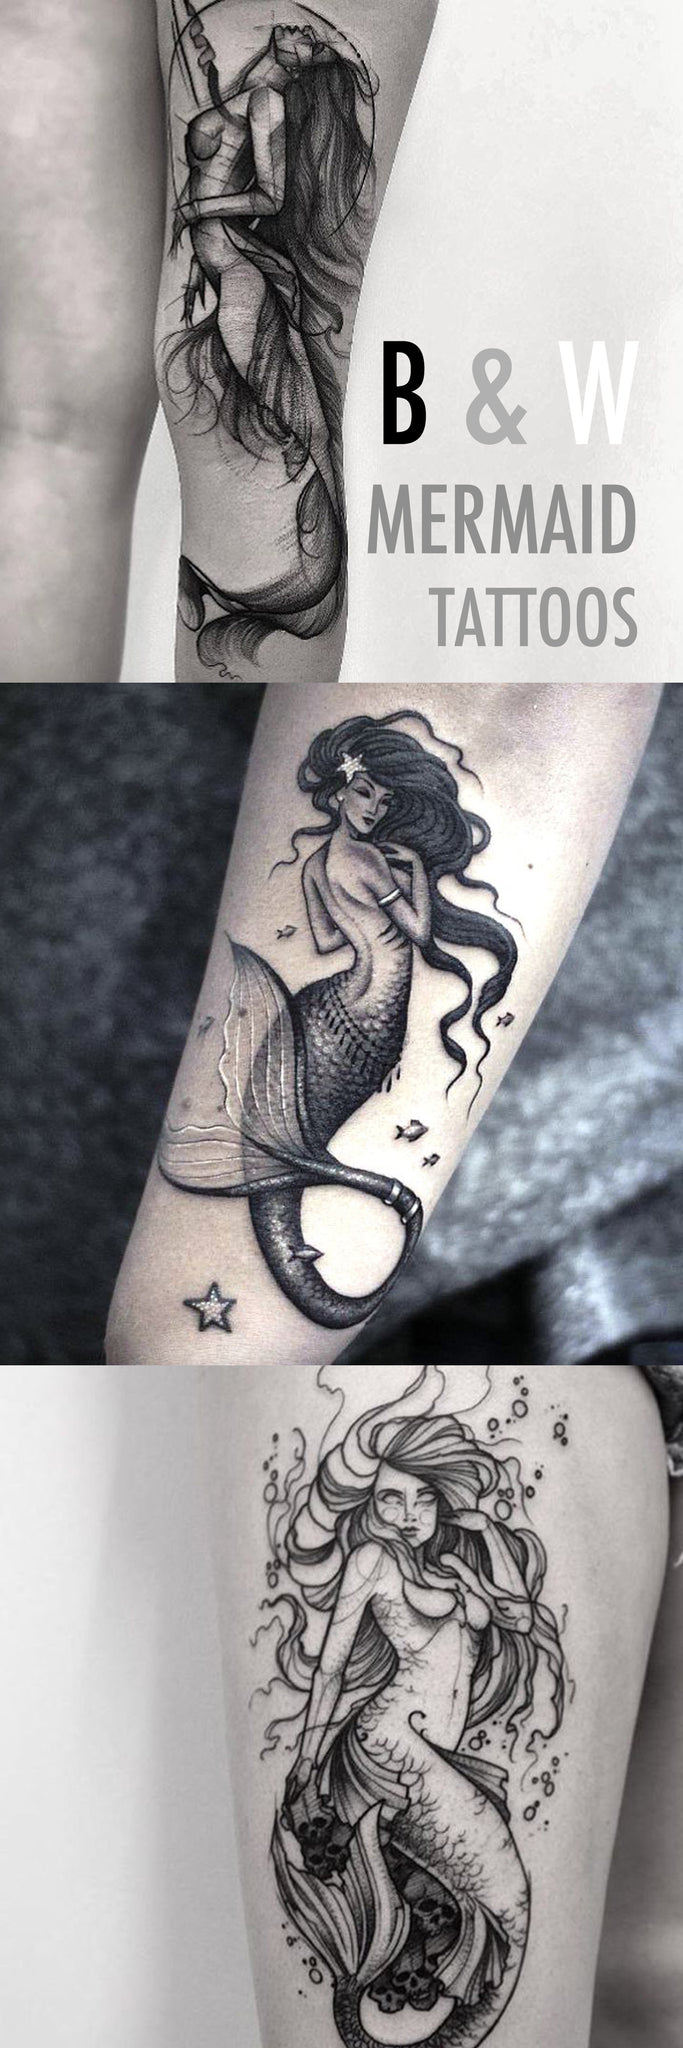 Beautiful Geometric Vintage Mermaid Tattoo Ideas at MyBodiArt.com - Black and White Large Thigh Arm Tatt for Women 